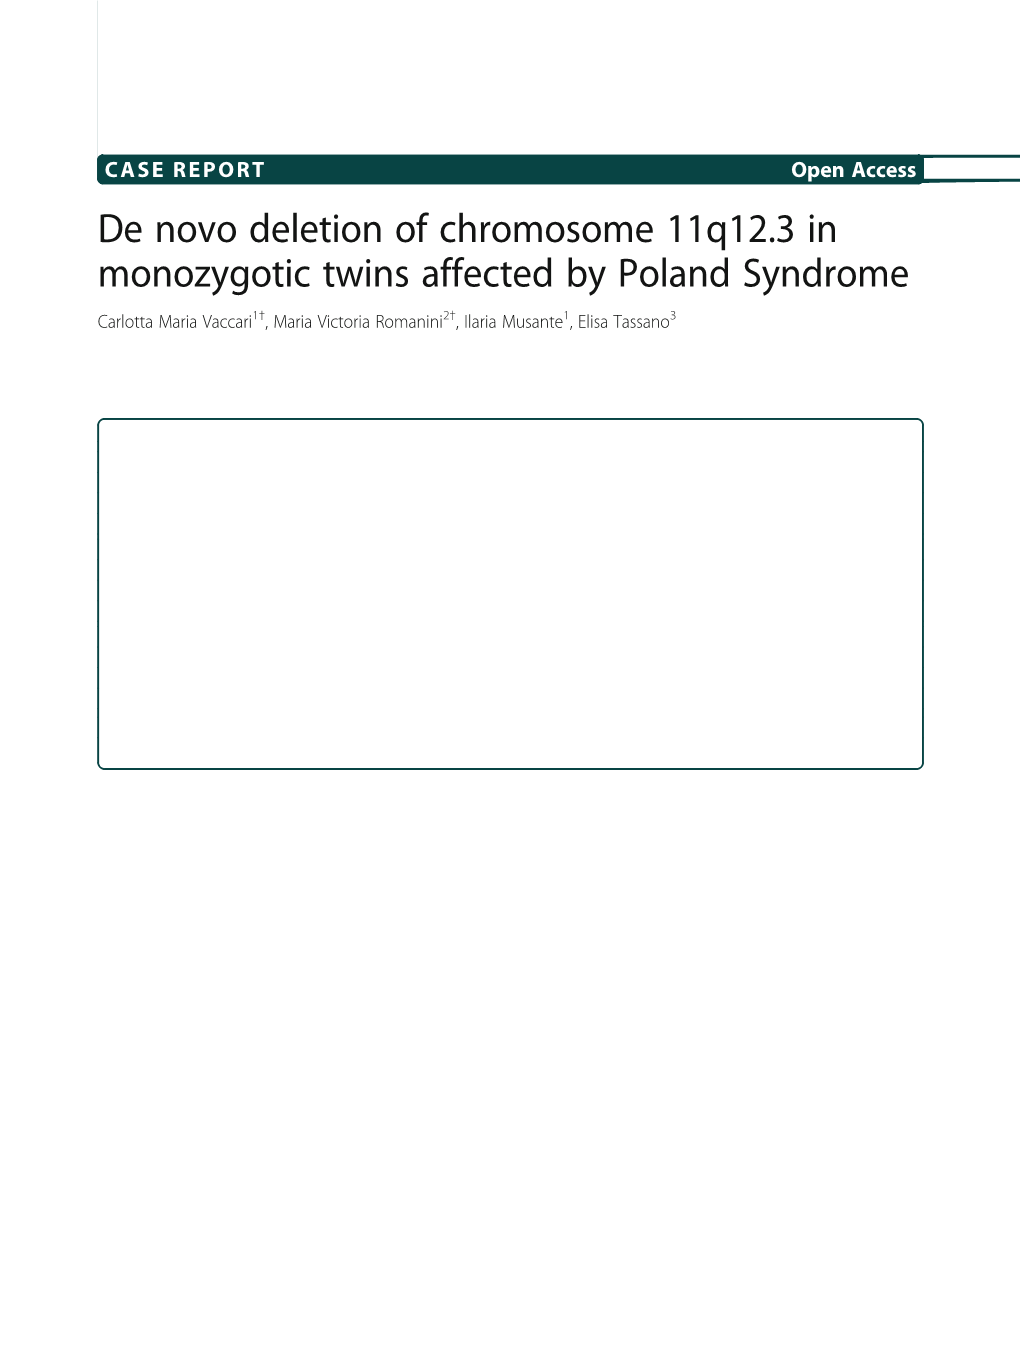 De Novo Deletion of Chromosome 11Q12.3 in Monozygotic Twins